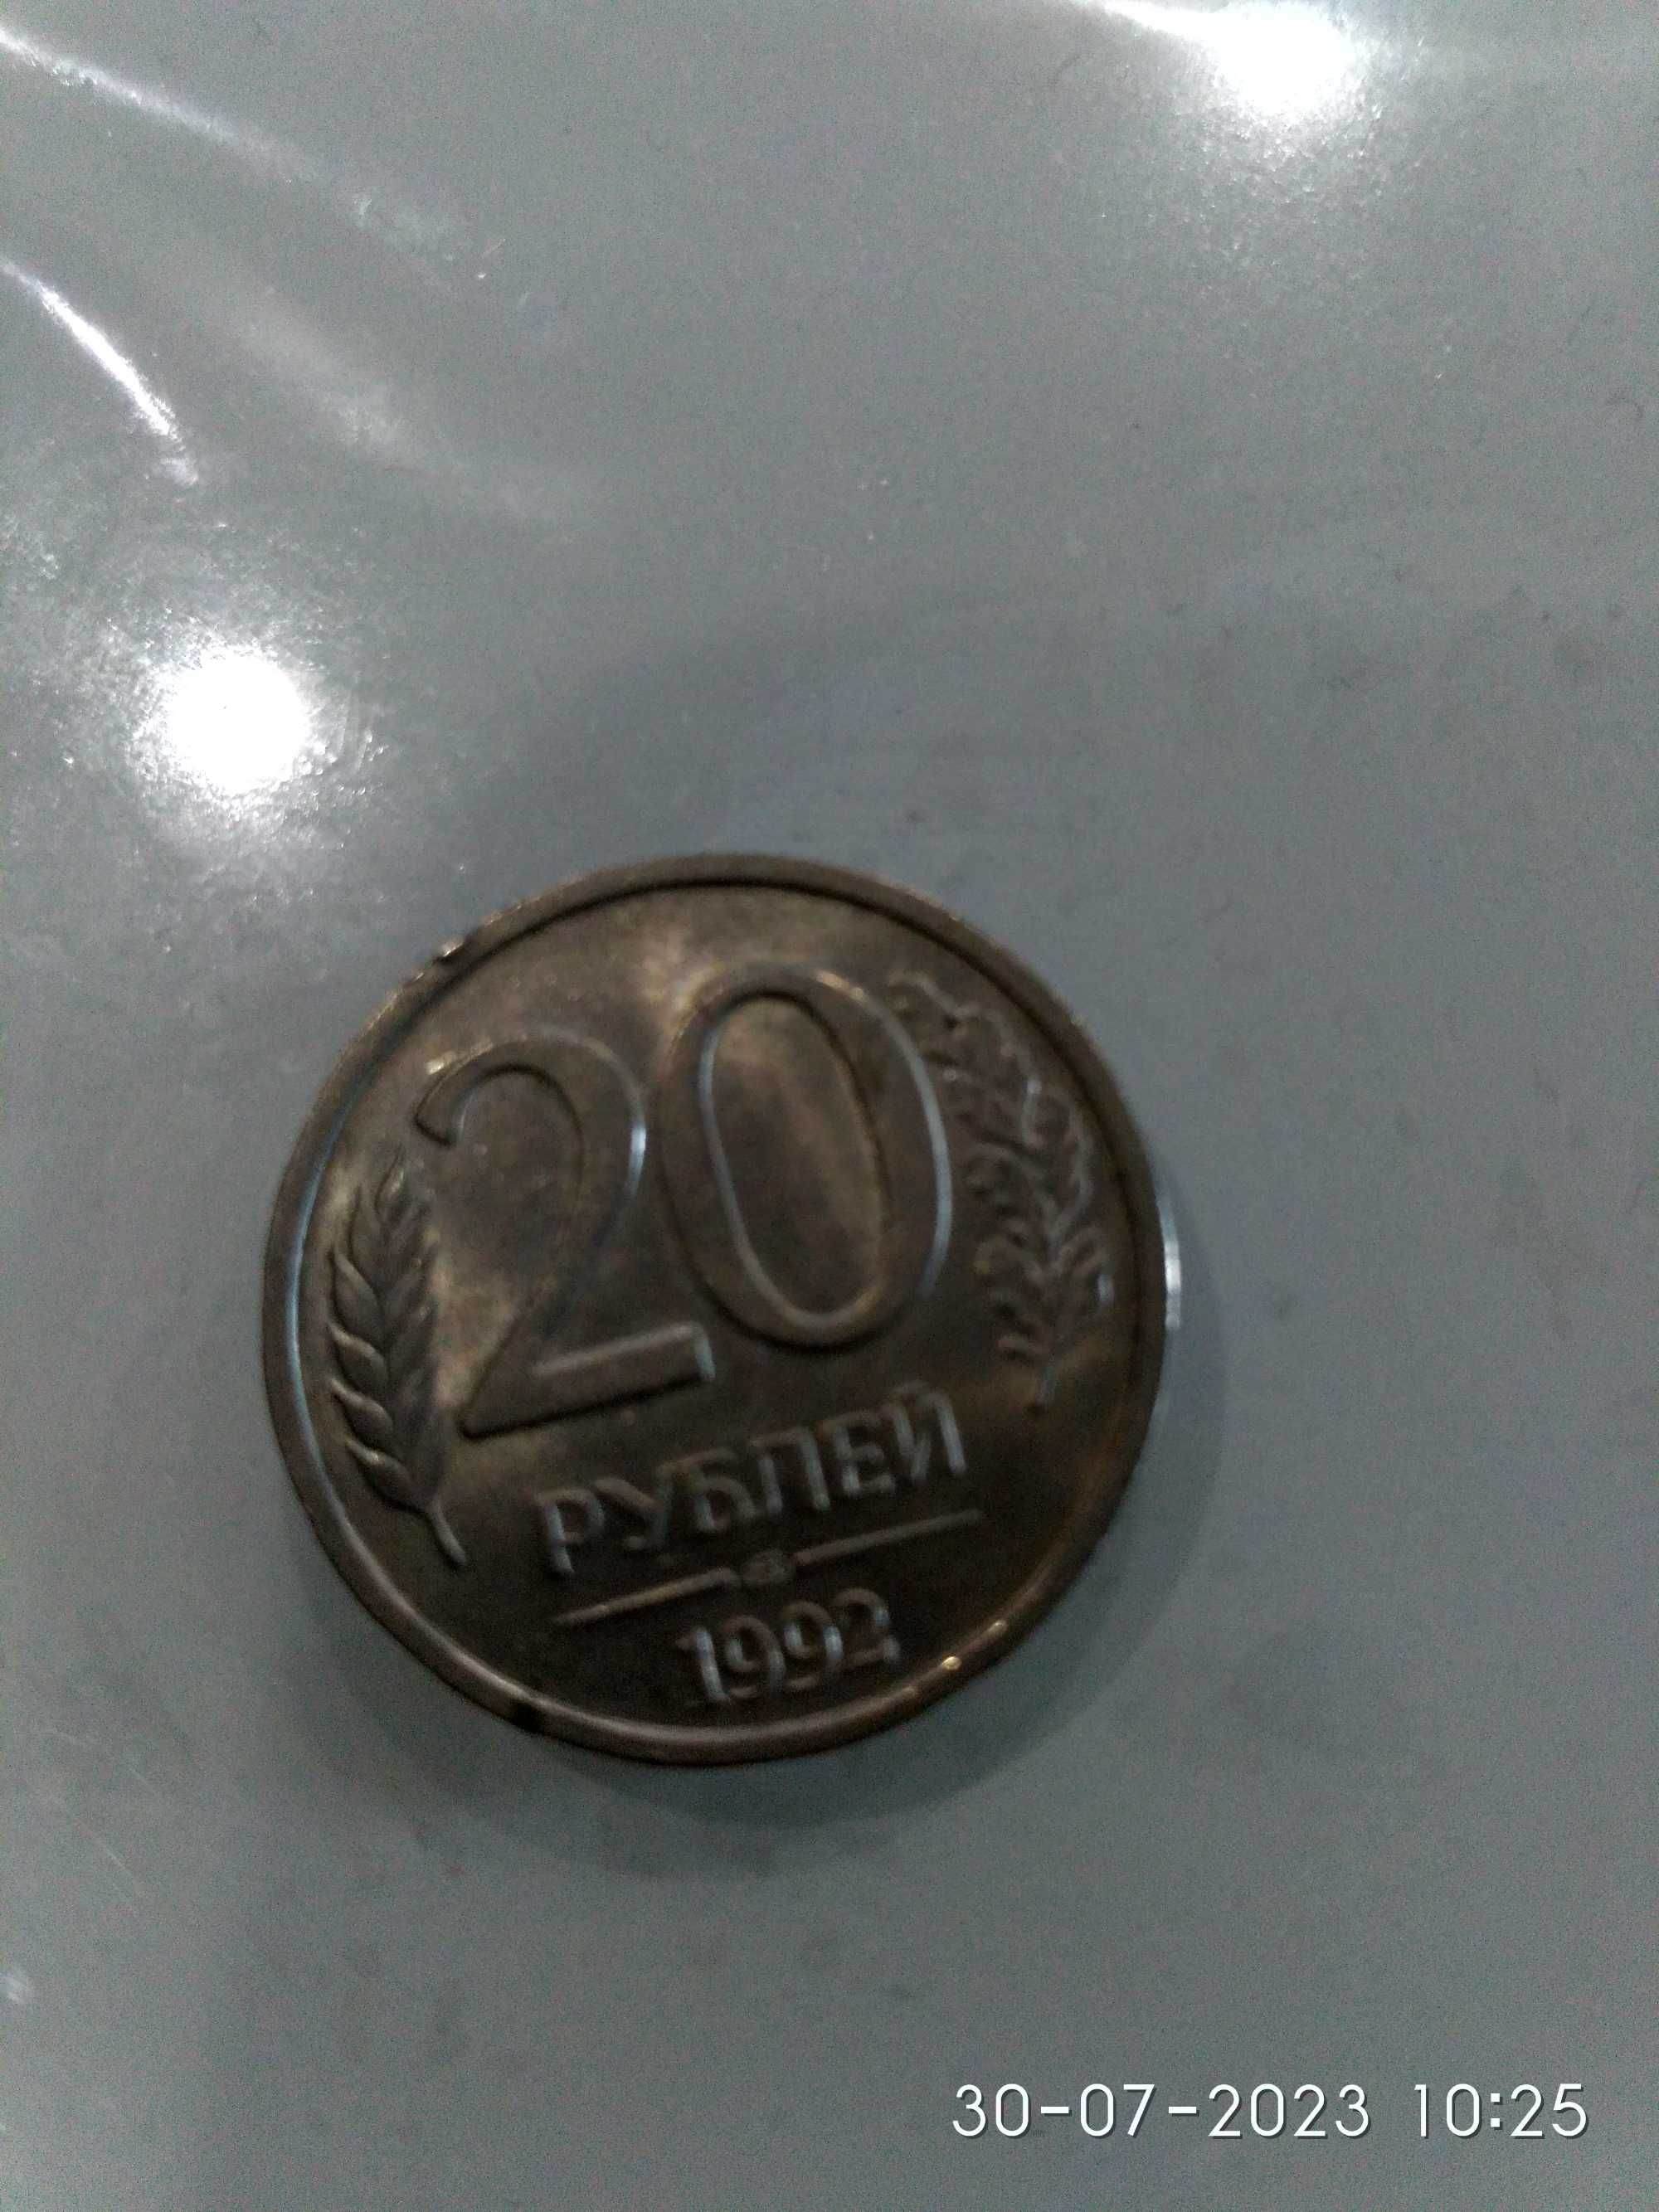 Монета 20 рублей 1992 г.